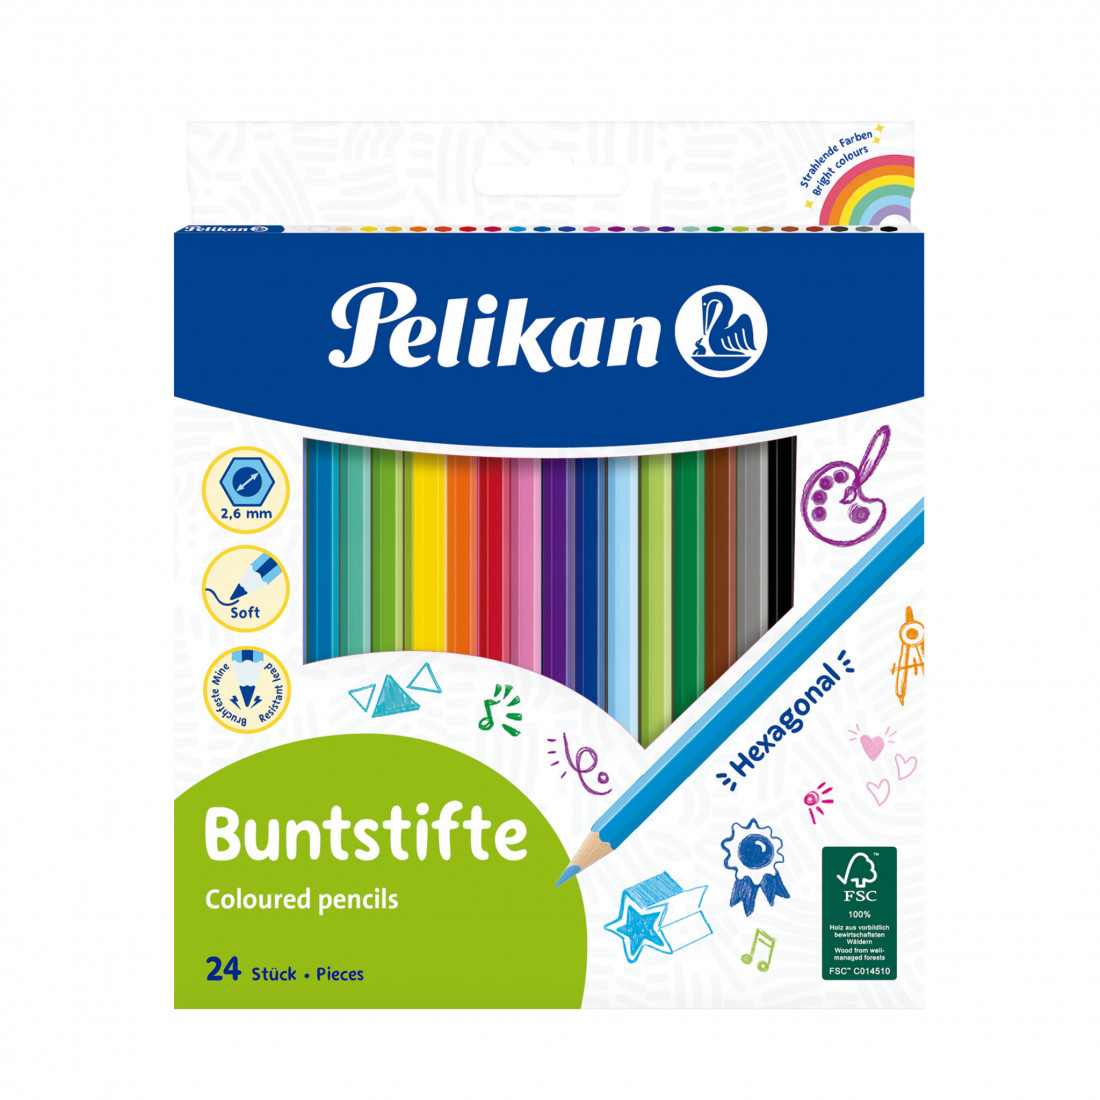 Pelikan Buntstifte  Coloured Pencils 24 pieces  724013